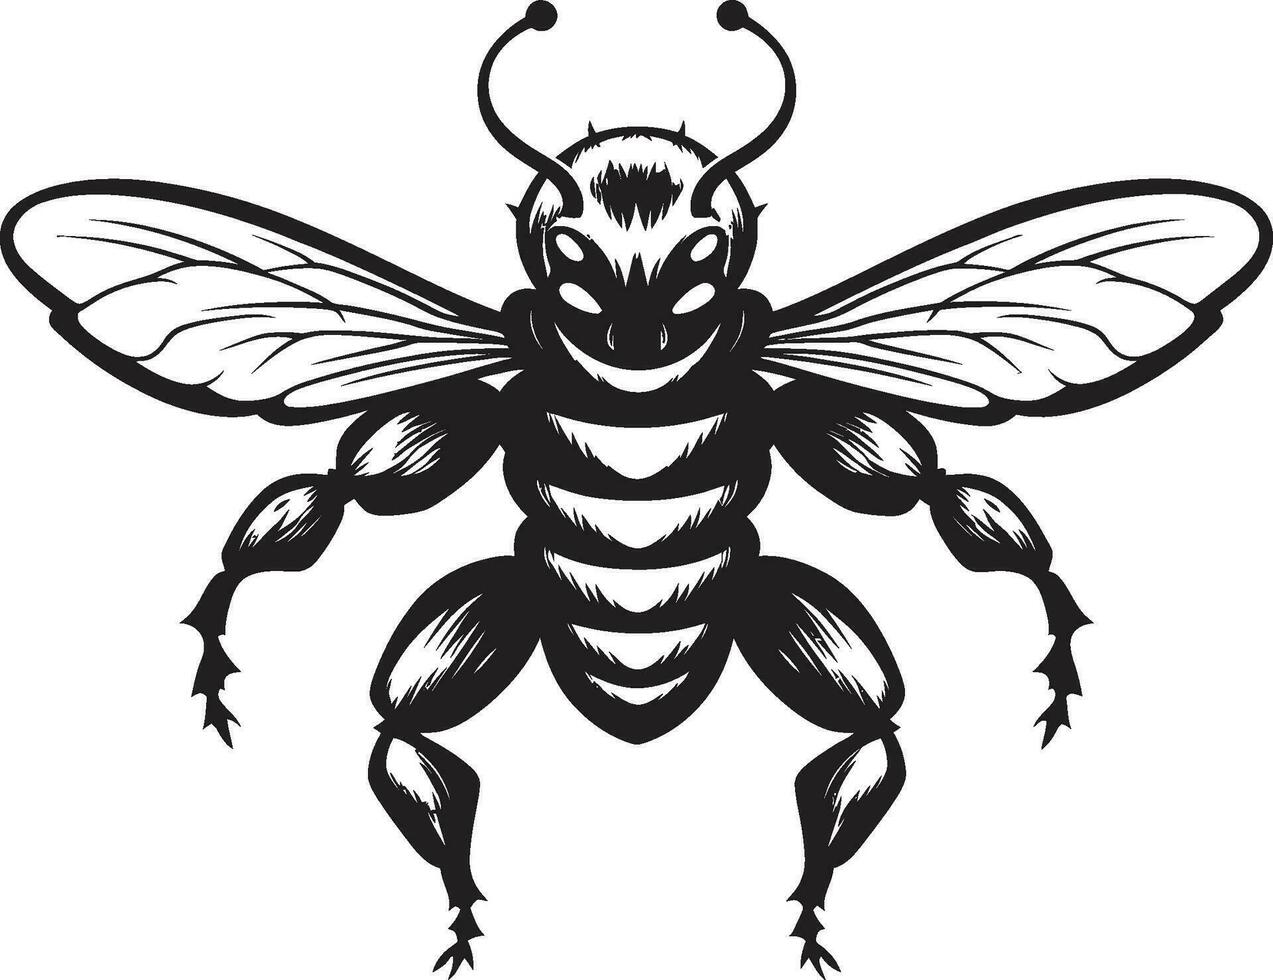 minimalista colmena majestad monocromo símbolo emblemático insecto excelencia poderoso Arte vector